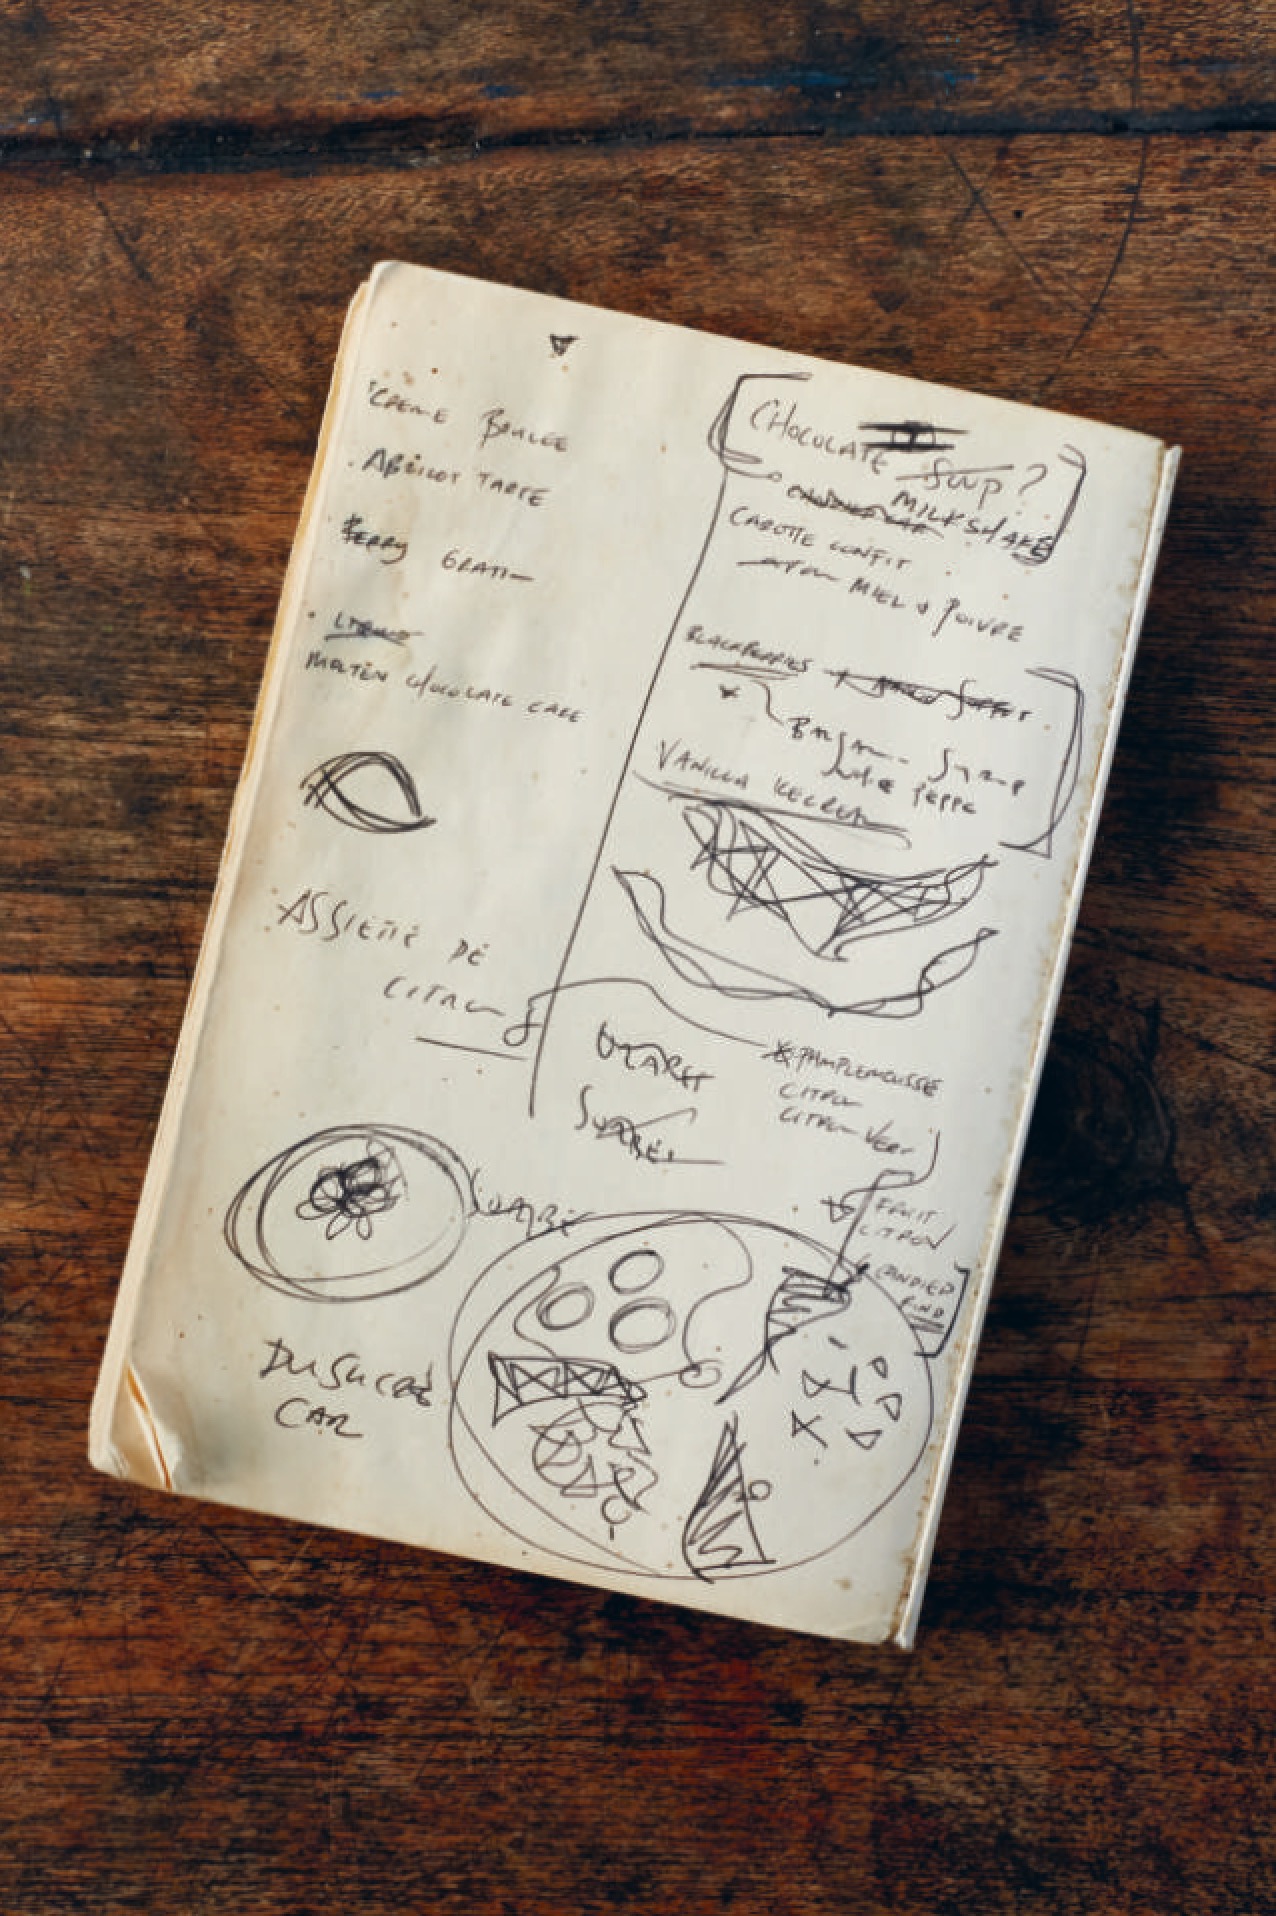 Will's scribbled pastry menu in his £Ernest Hemingway paperback